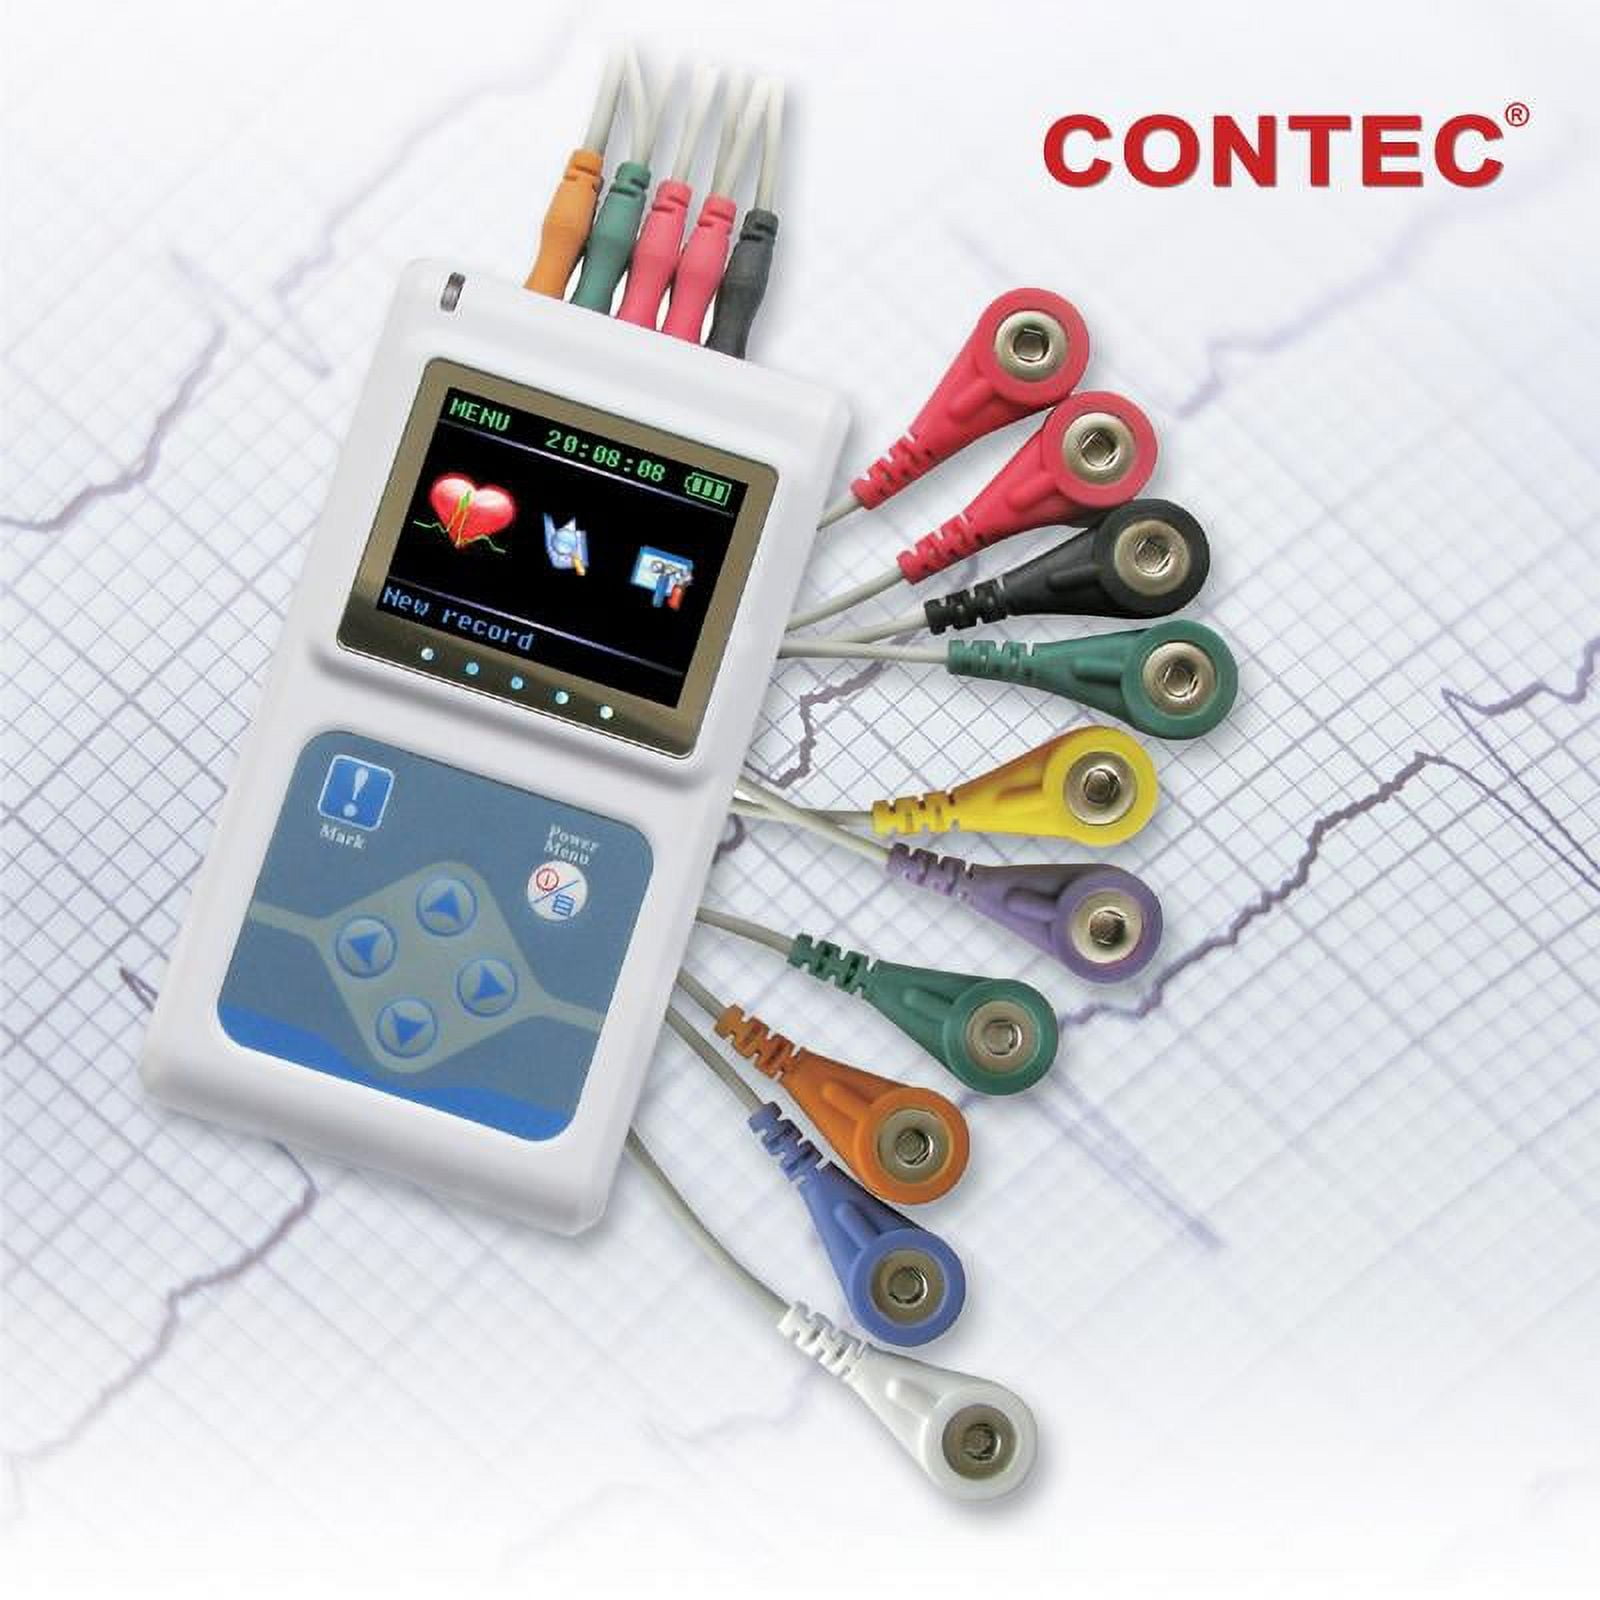 CONTEC TLC5000 ECG Holter 12 Channel 24h EKG Monitor PC Software Analyzer  FDA&CE